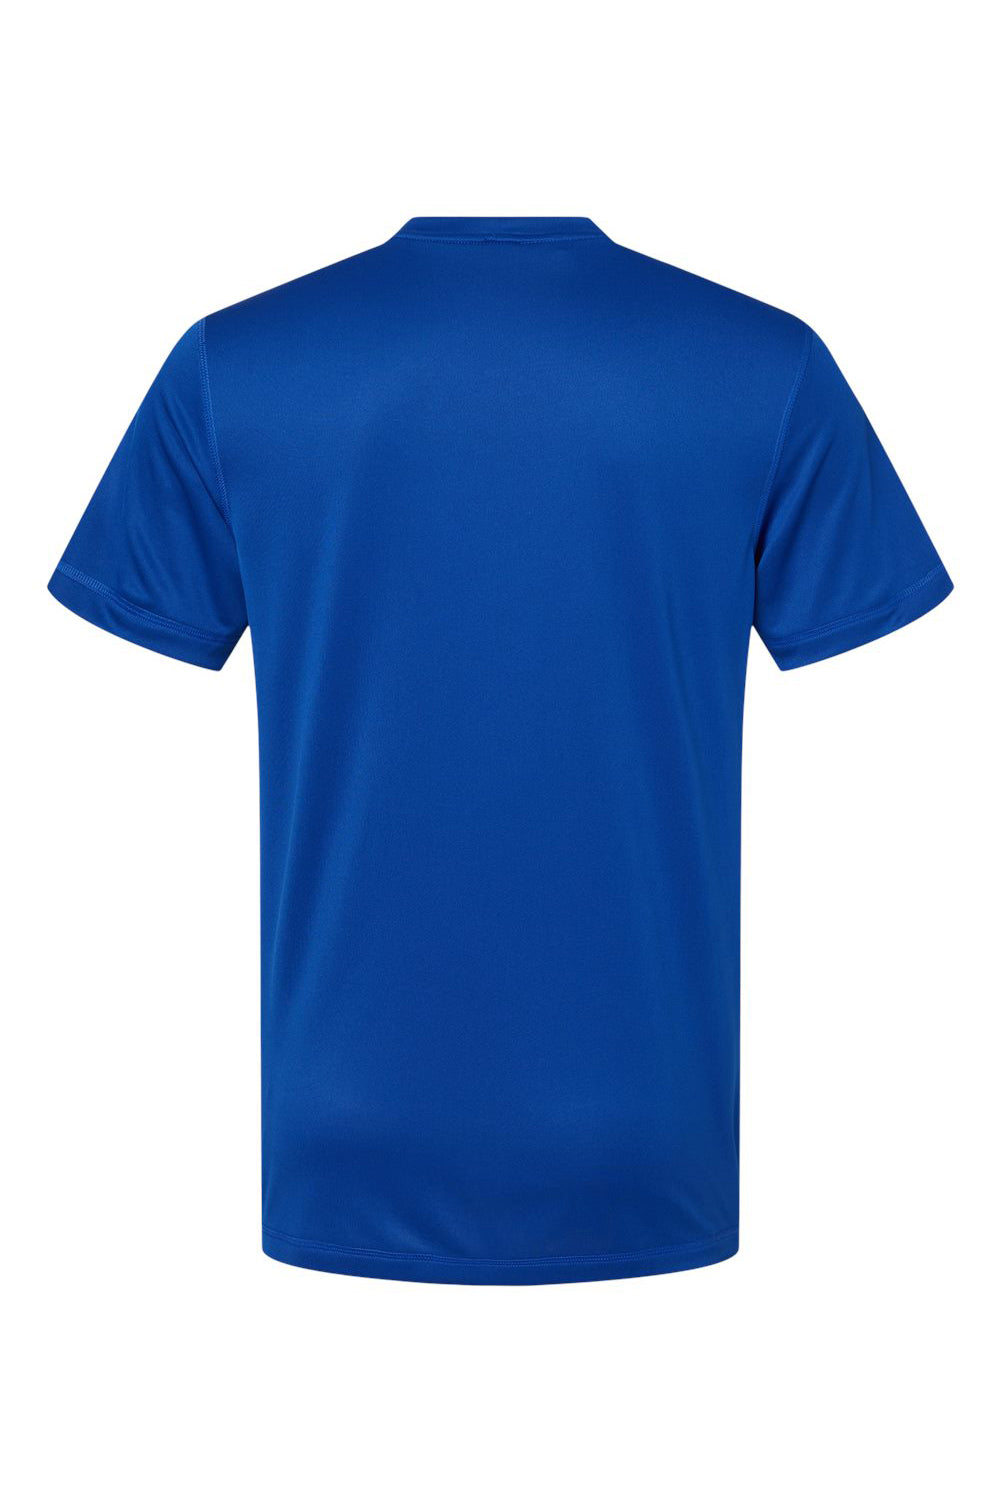 Adidas A376 Mens Short Sleeve Crewneck T-Shirt Collegiate Royal Blue Flat Back